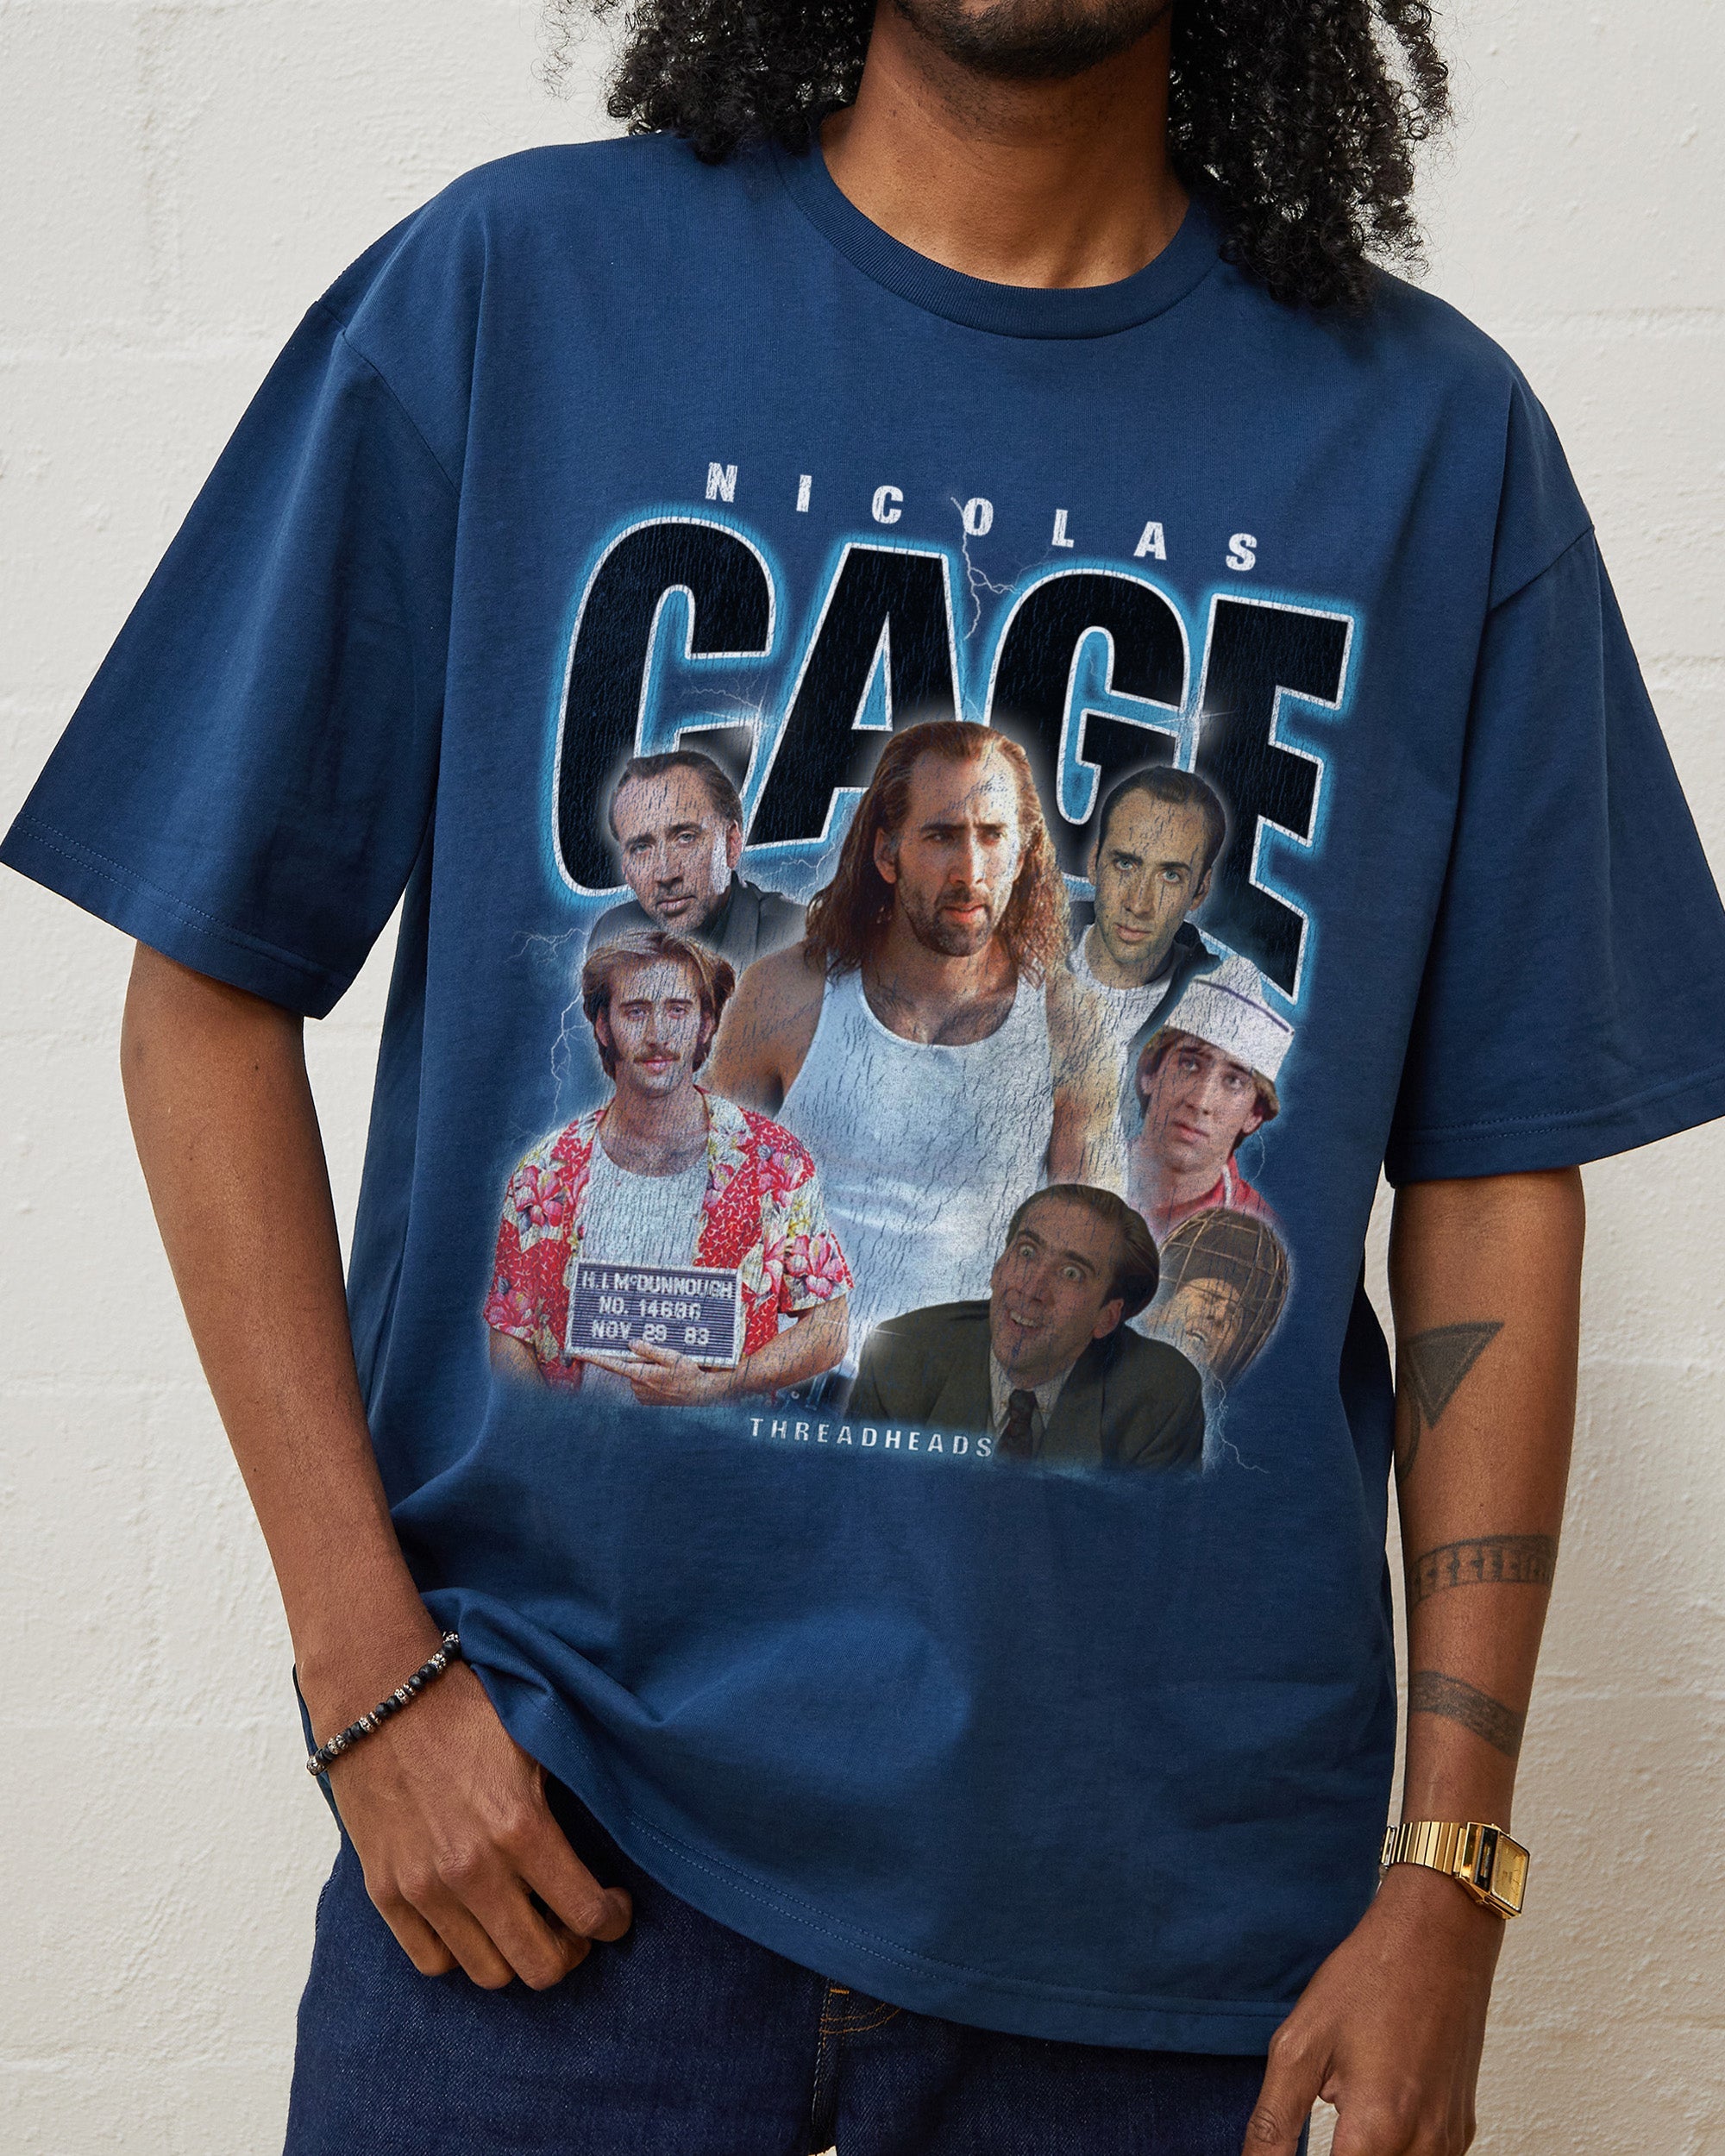 Nic Cage T-Shirt Australia Online